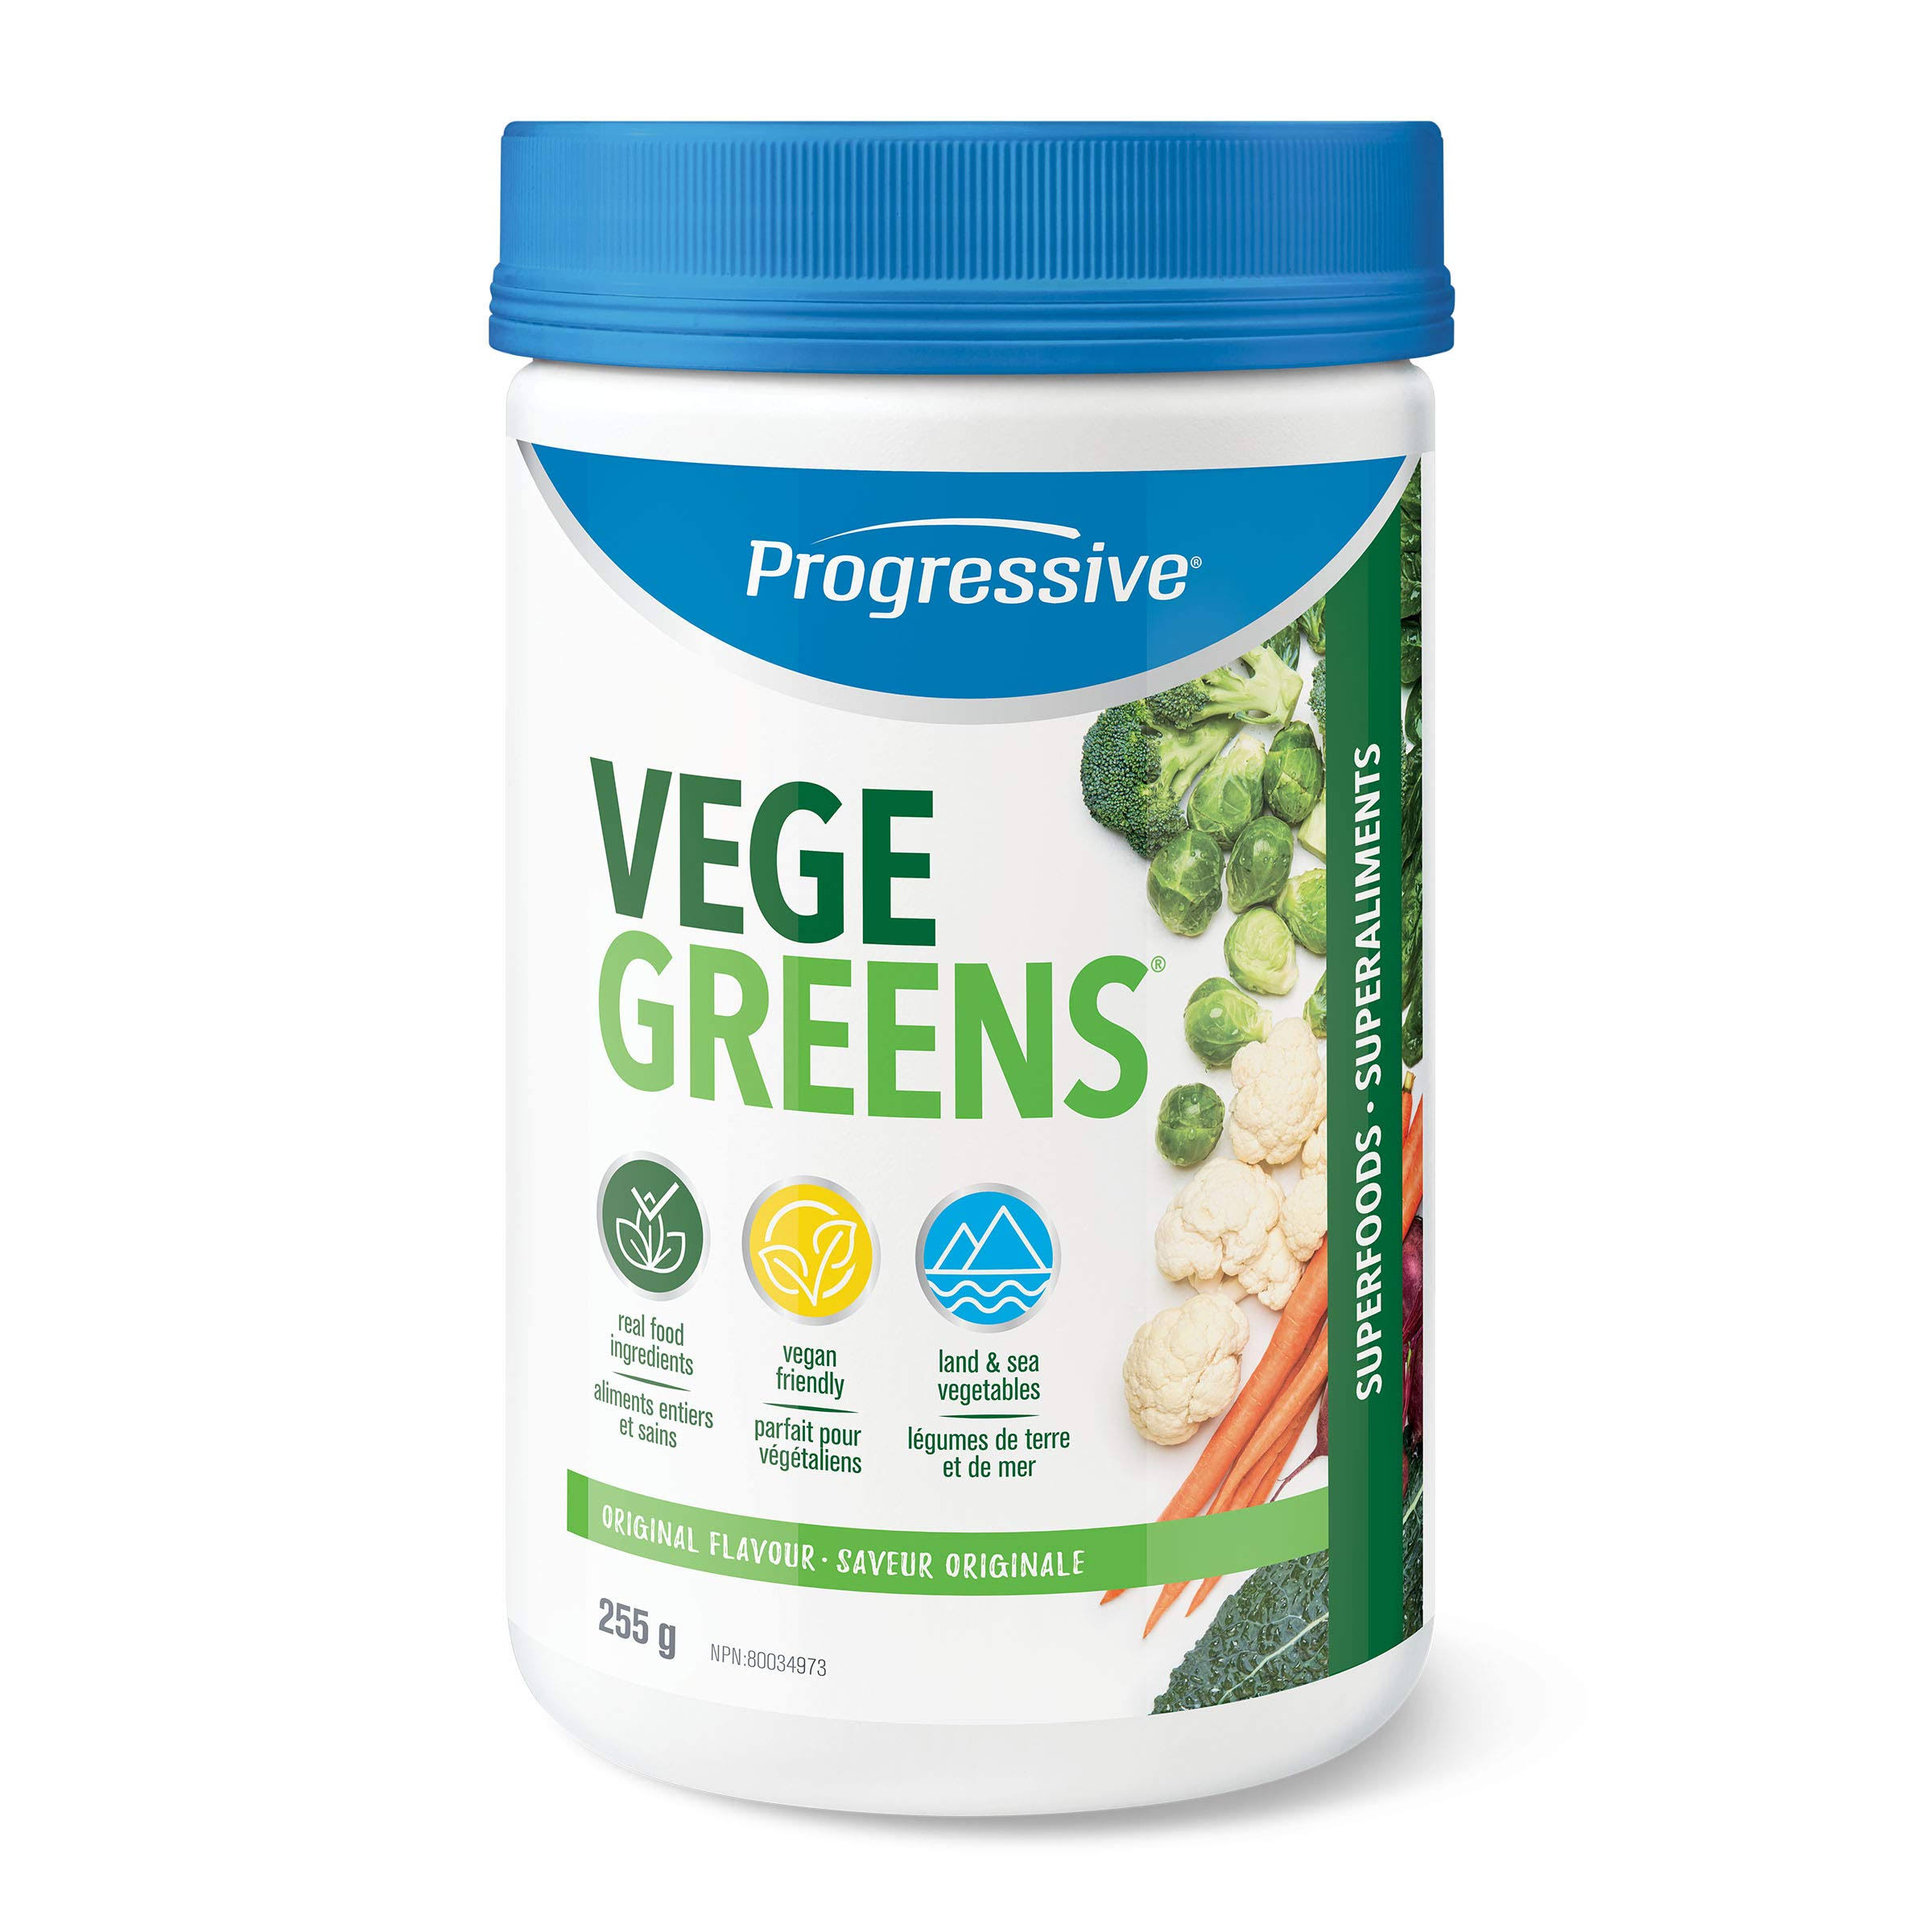 Progressive VegeGreens, Vegan Greens Supplement Powder - Original Flav